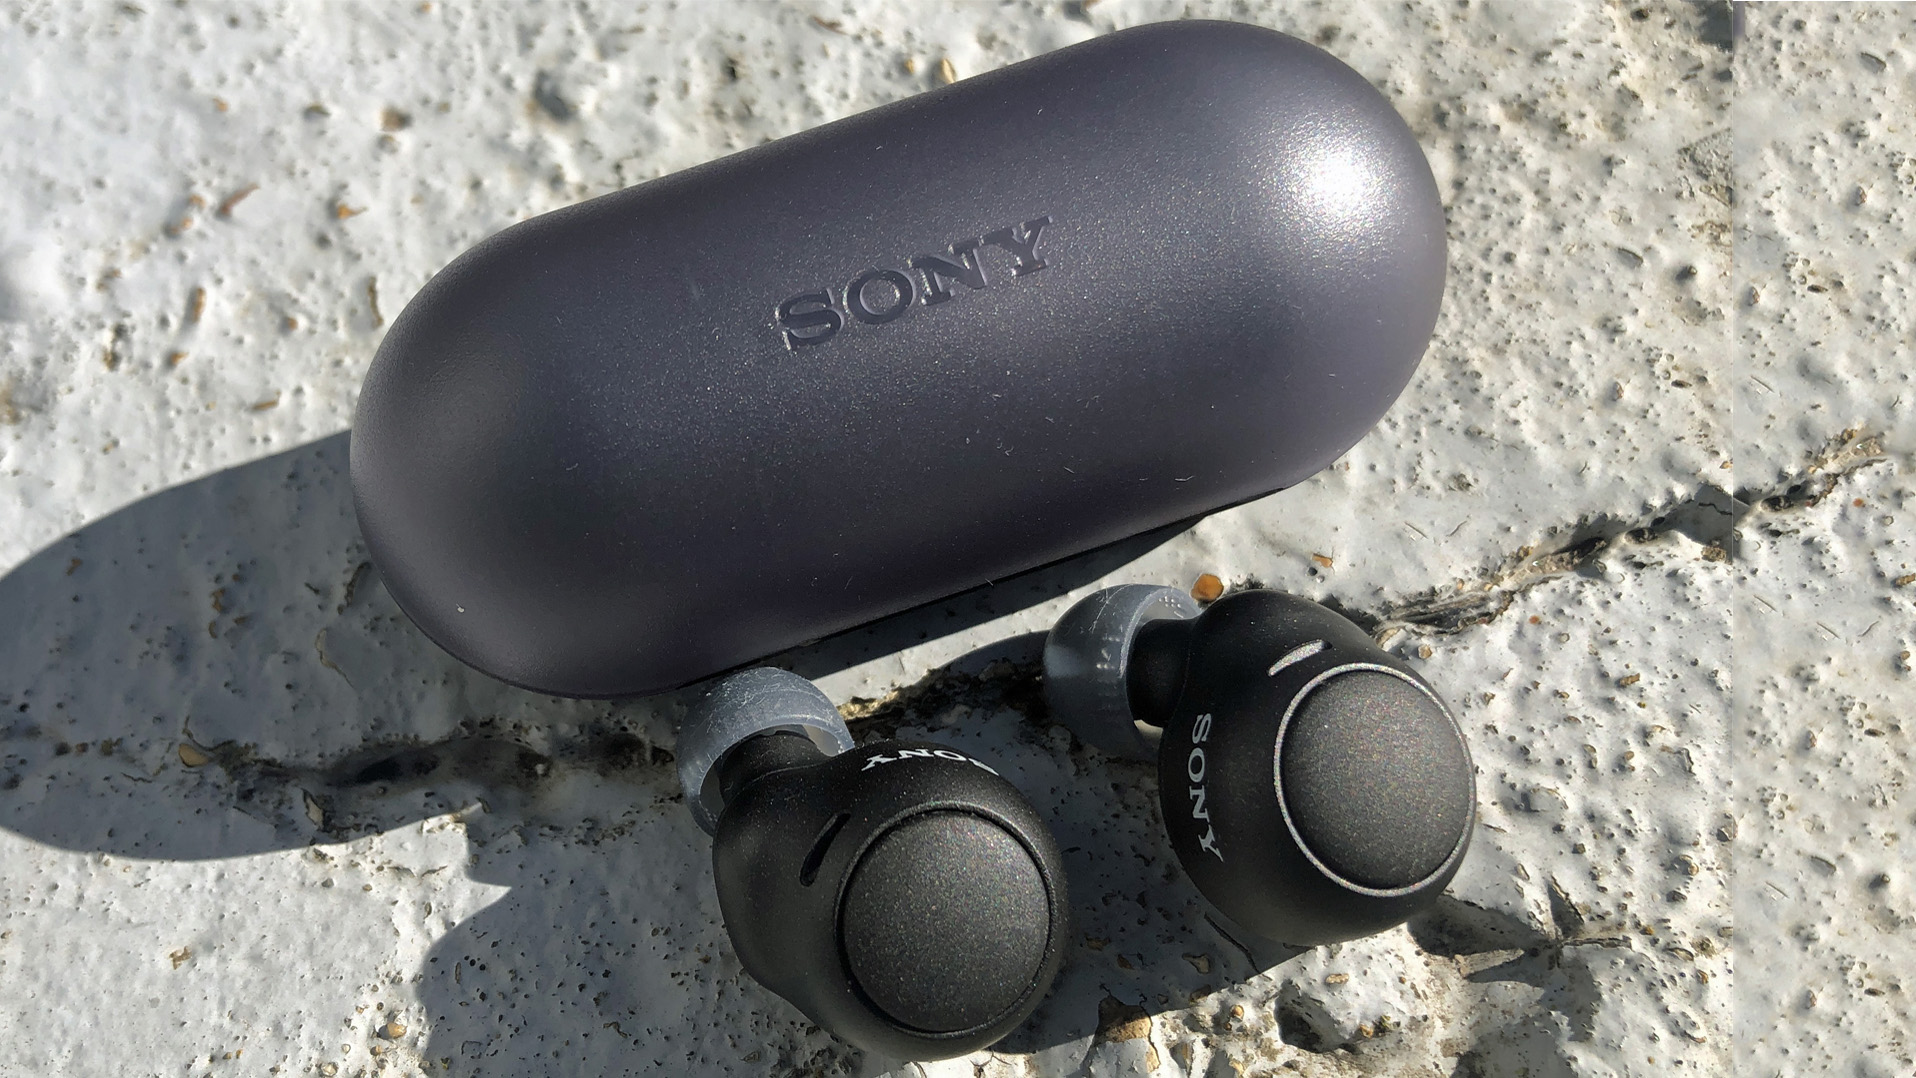 Sony WF-C500 review: fantastic value true wireless earbuds | TechRadar